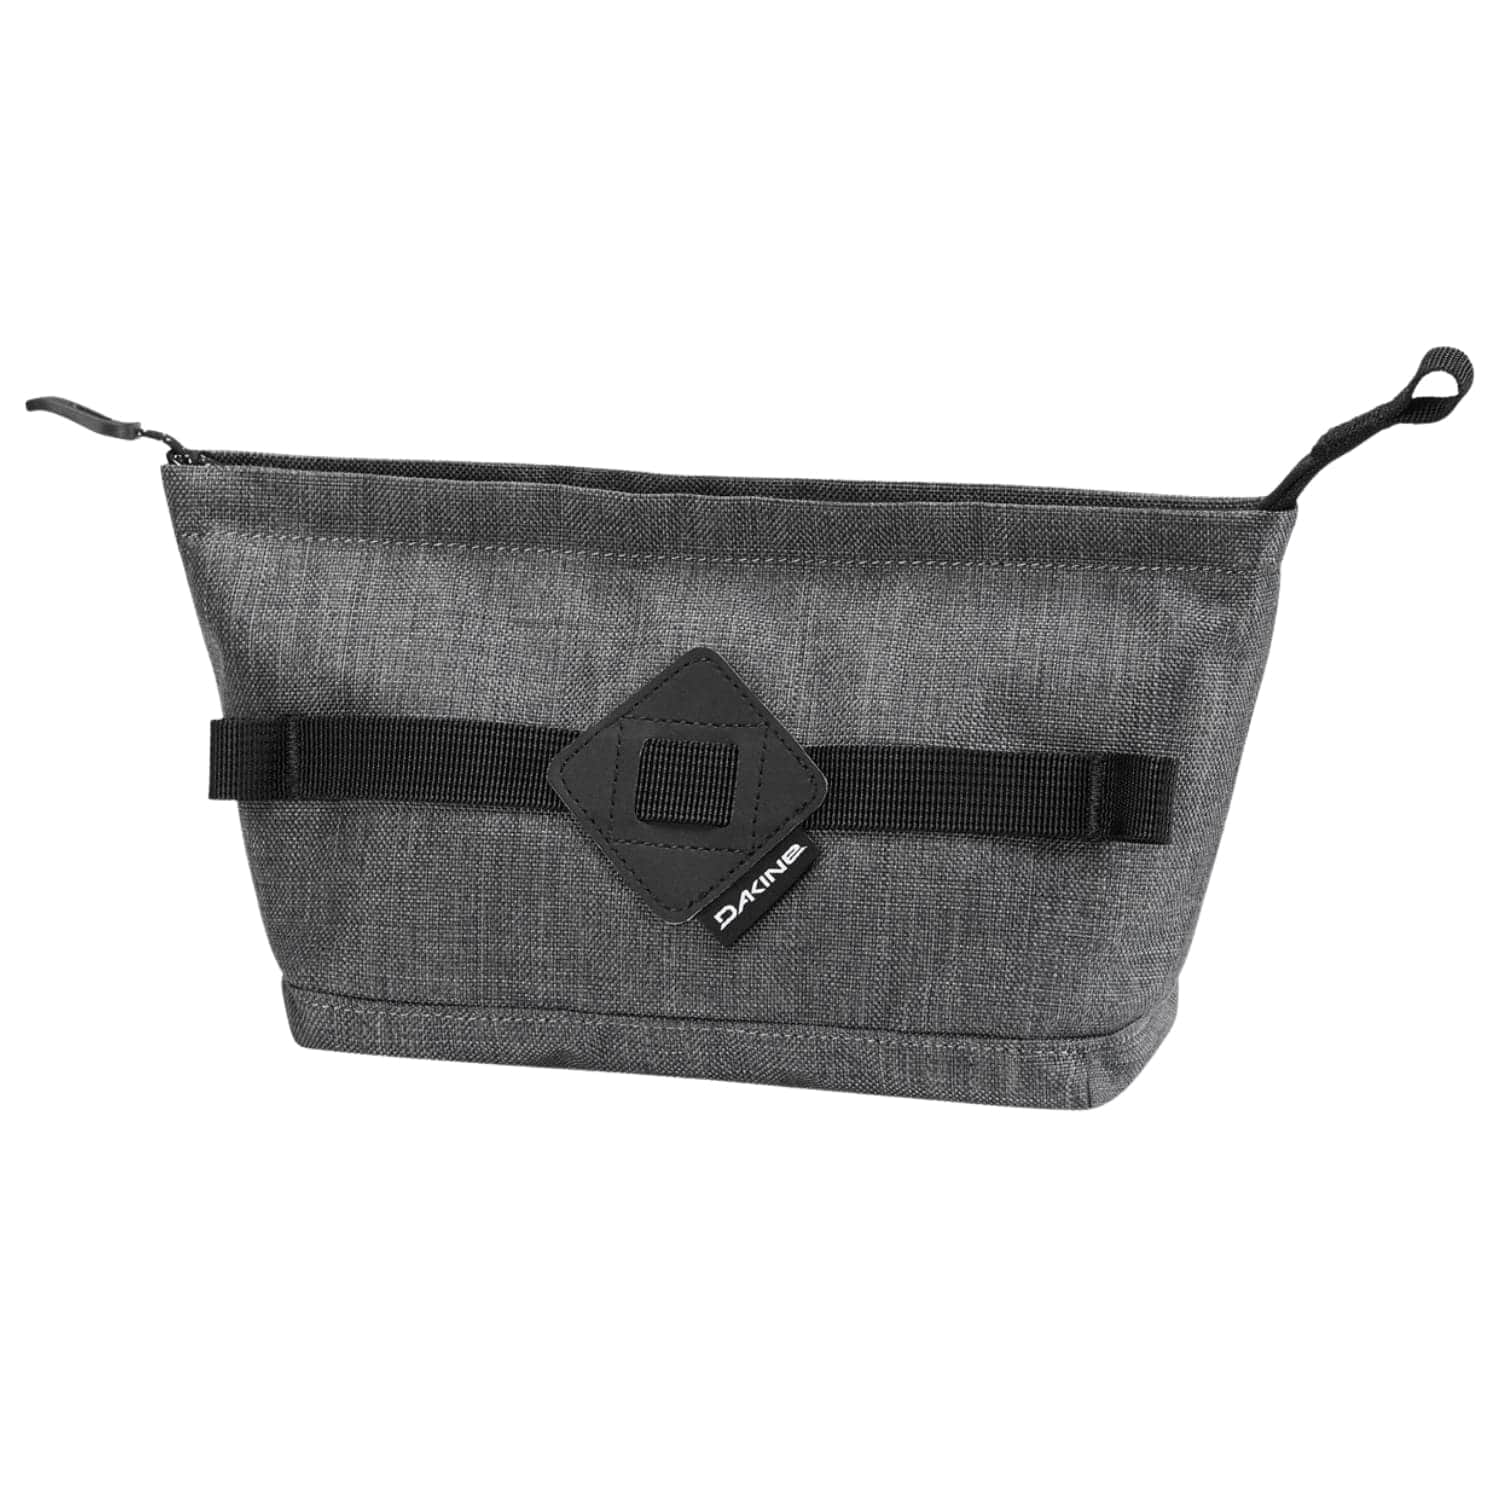 Dakine Dopp Kit L Washbag/Beauty Case - Carbon - Travel/Wash Bag by Dakine Large